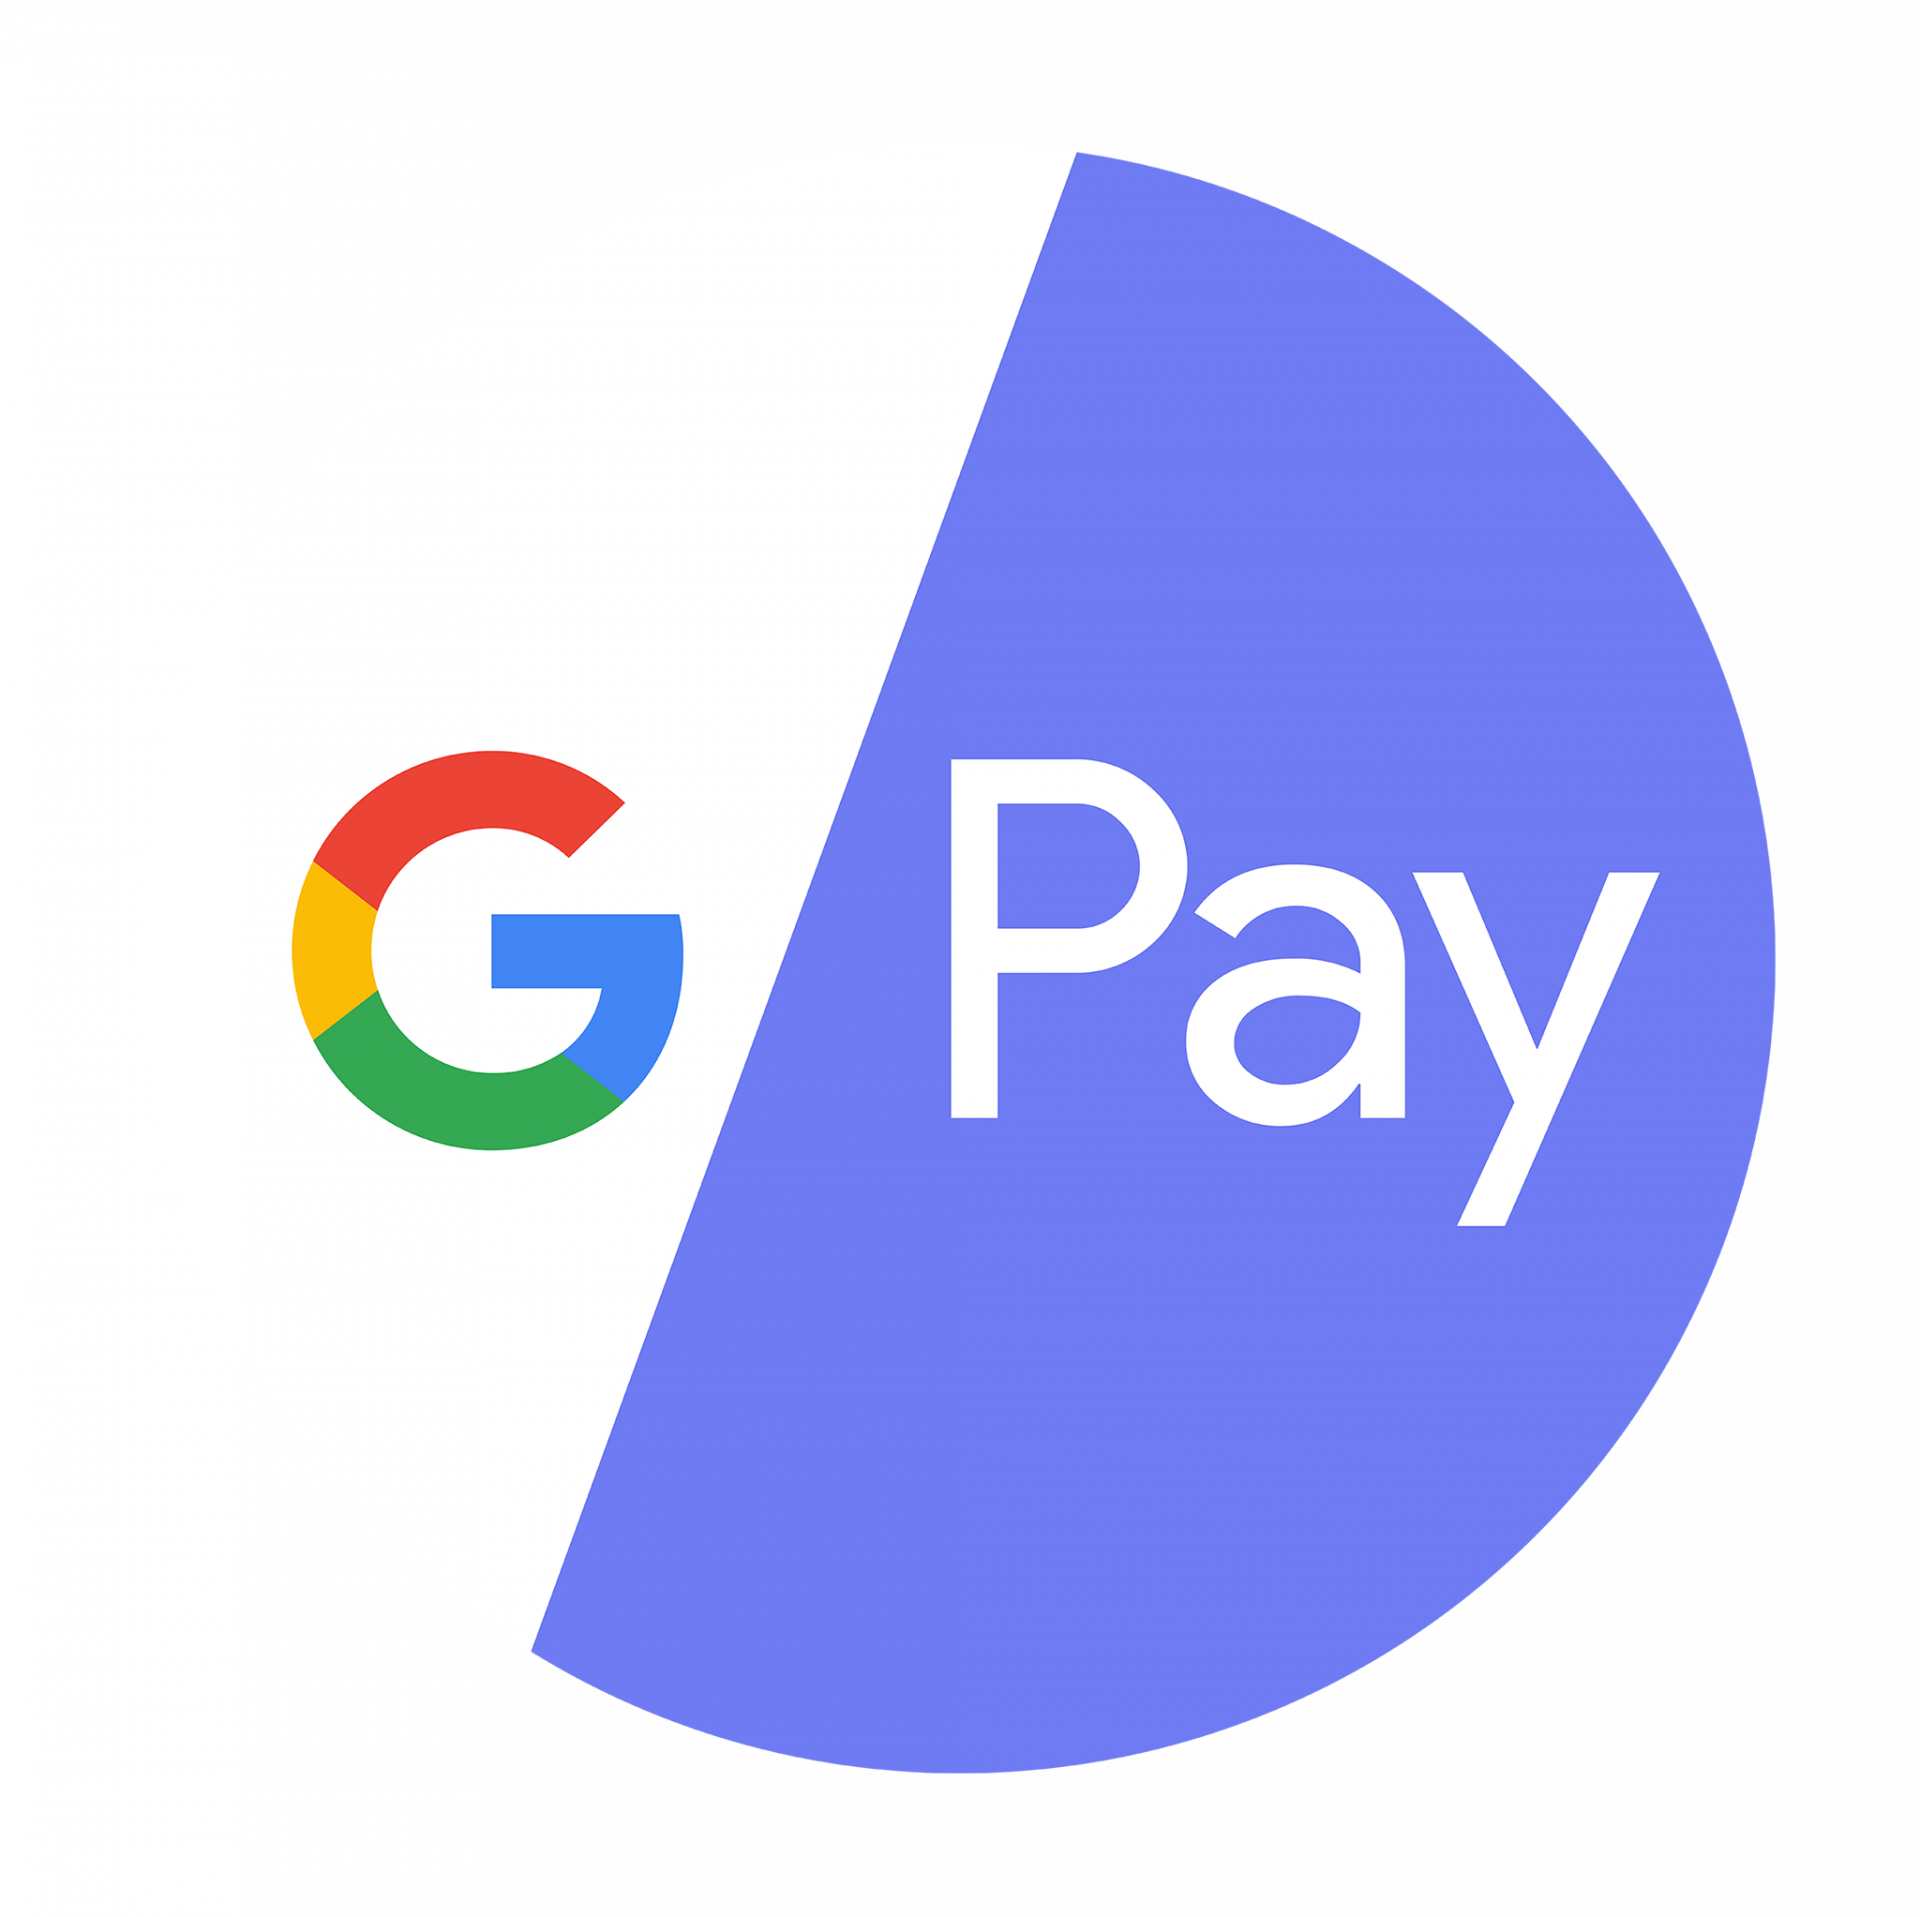 google pay account login